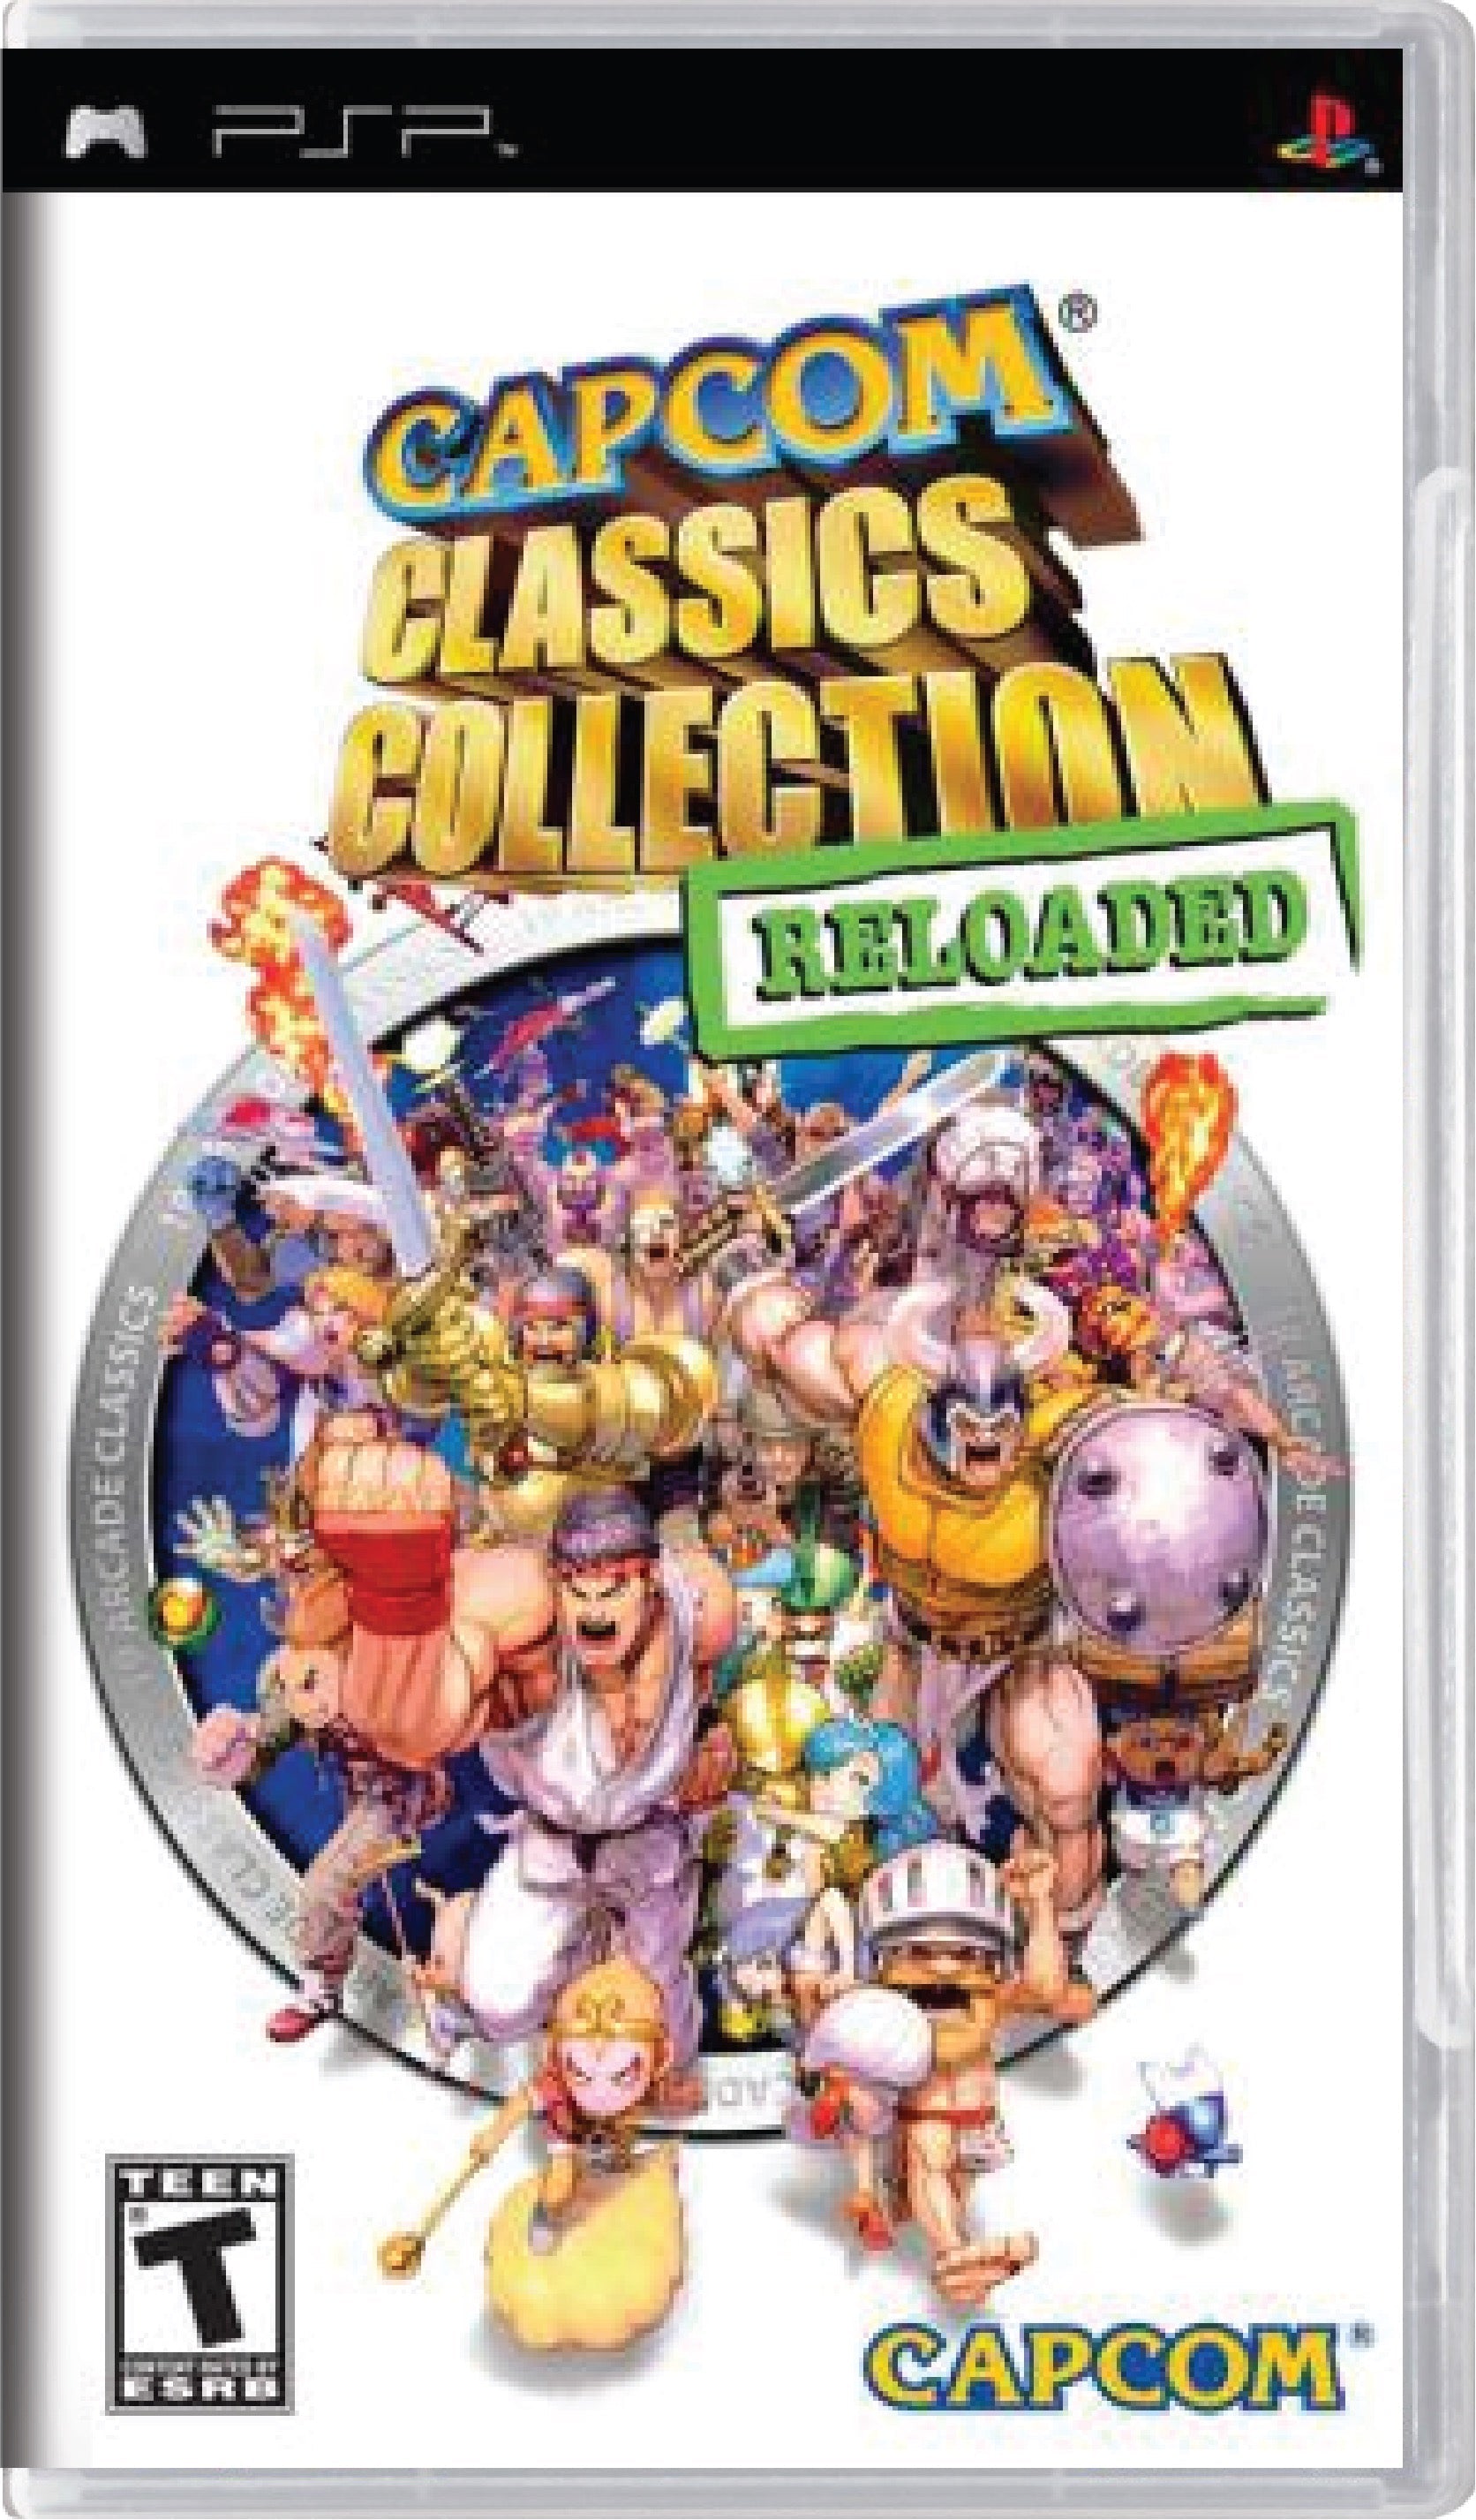 Capcom Classics Collection Reloaded Cover Art